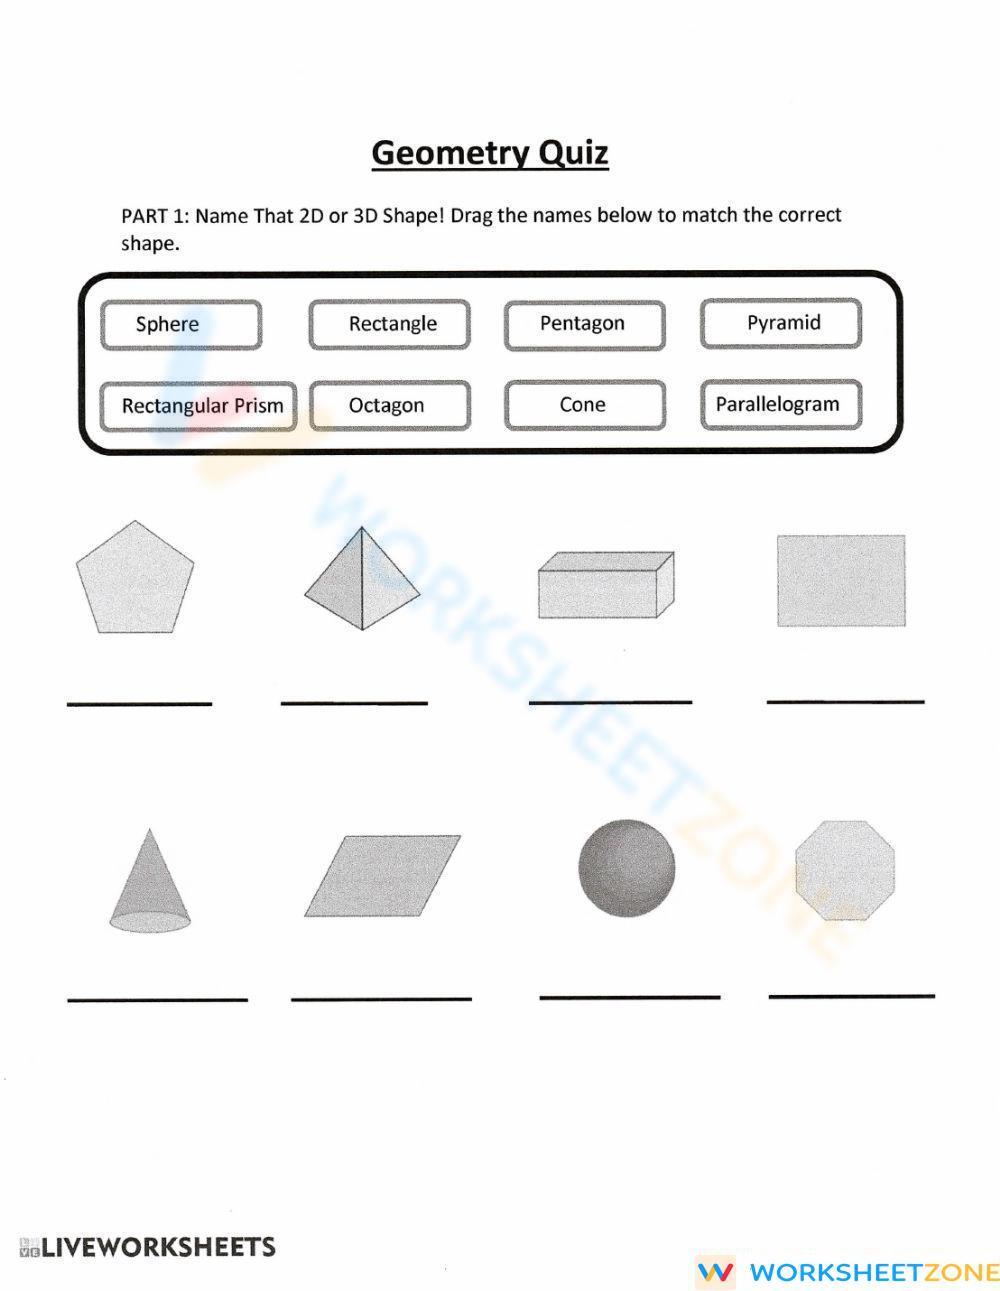 https://storage.googleapis.com/worksheetzone/image/62153f2b7ed2e5475841fcbf/grade-3-geometry-quiz-w1000-h1291-preview-0.jpg